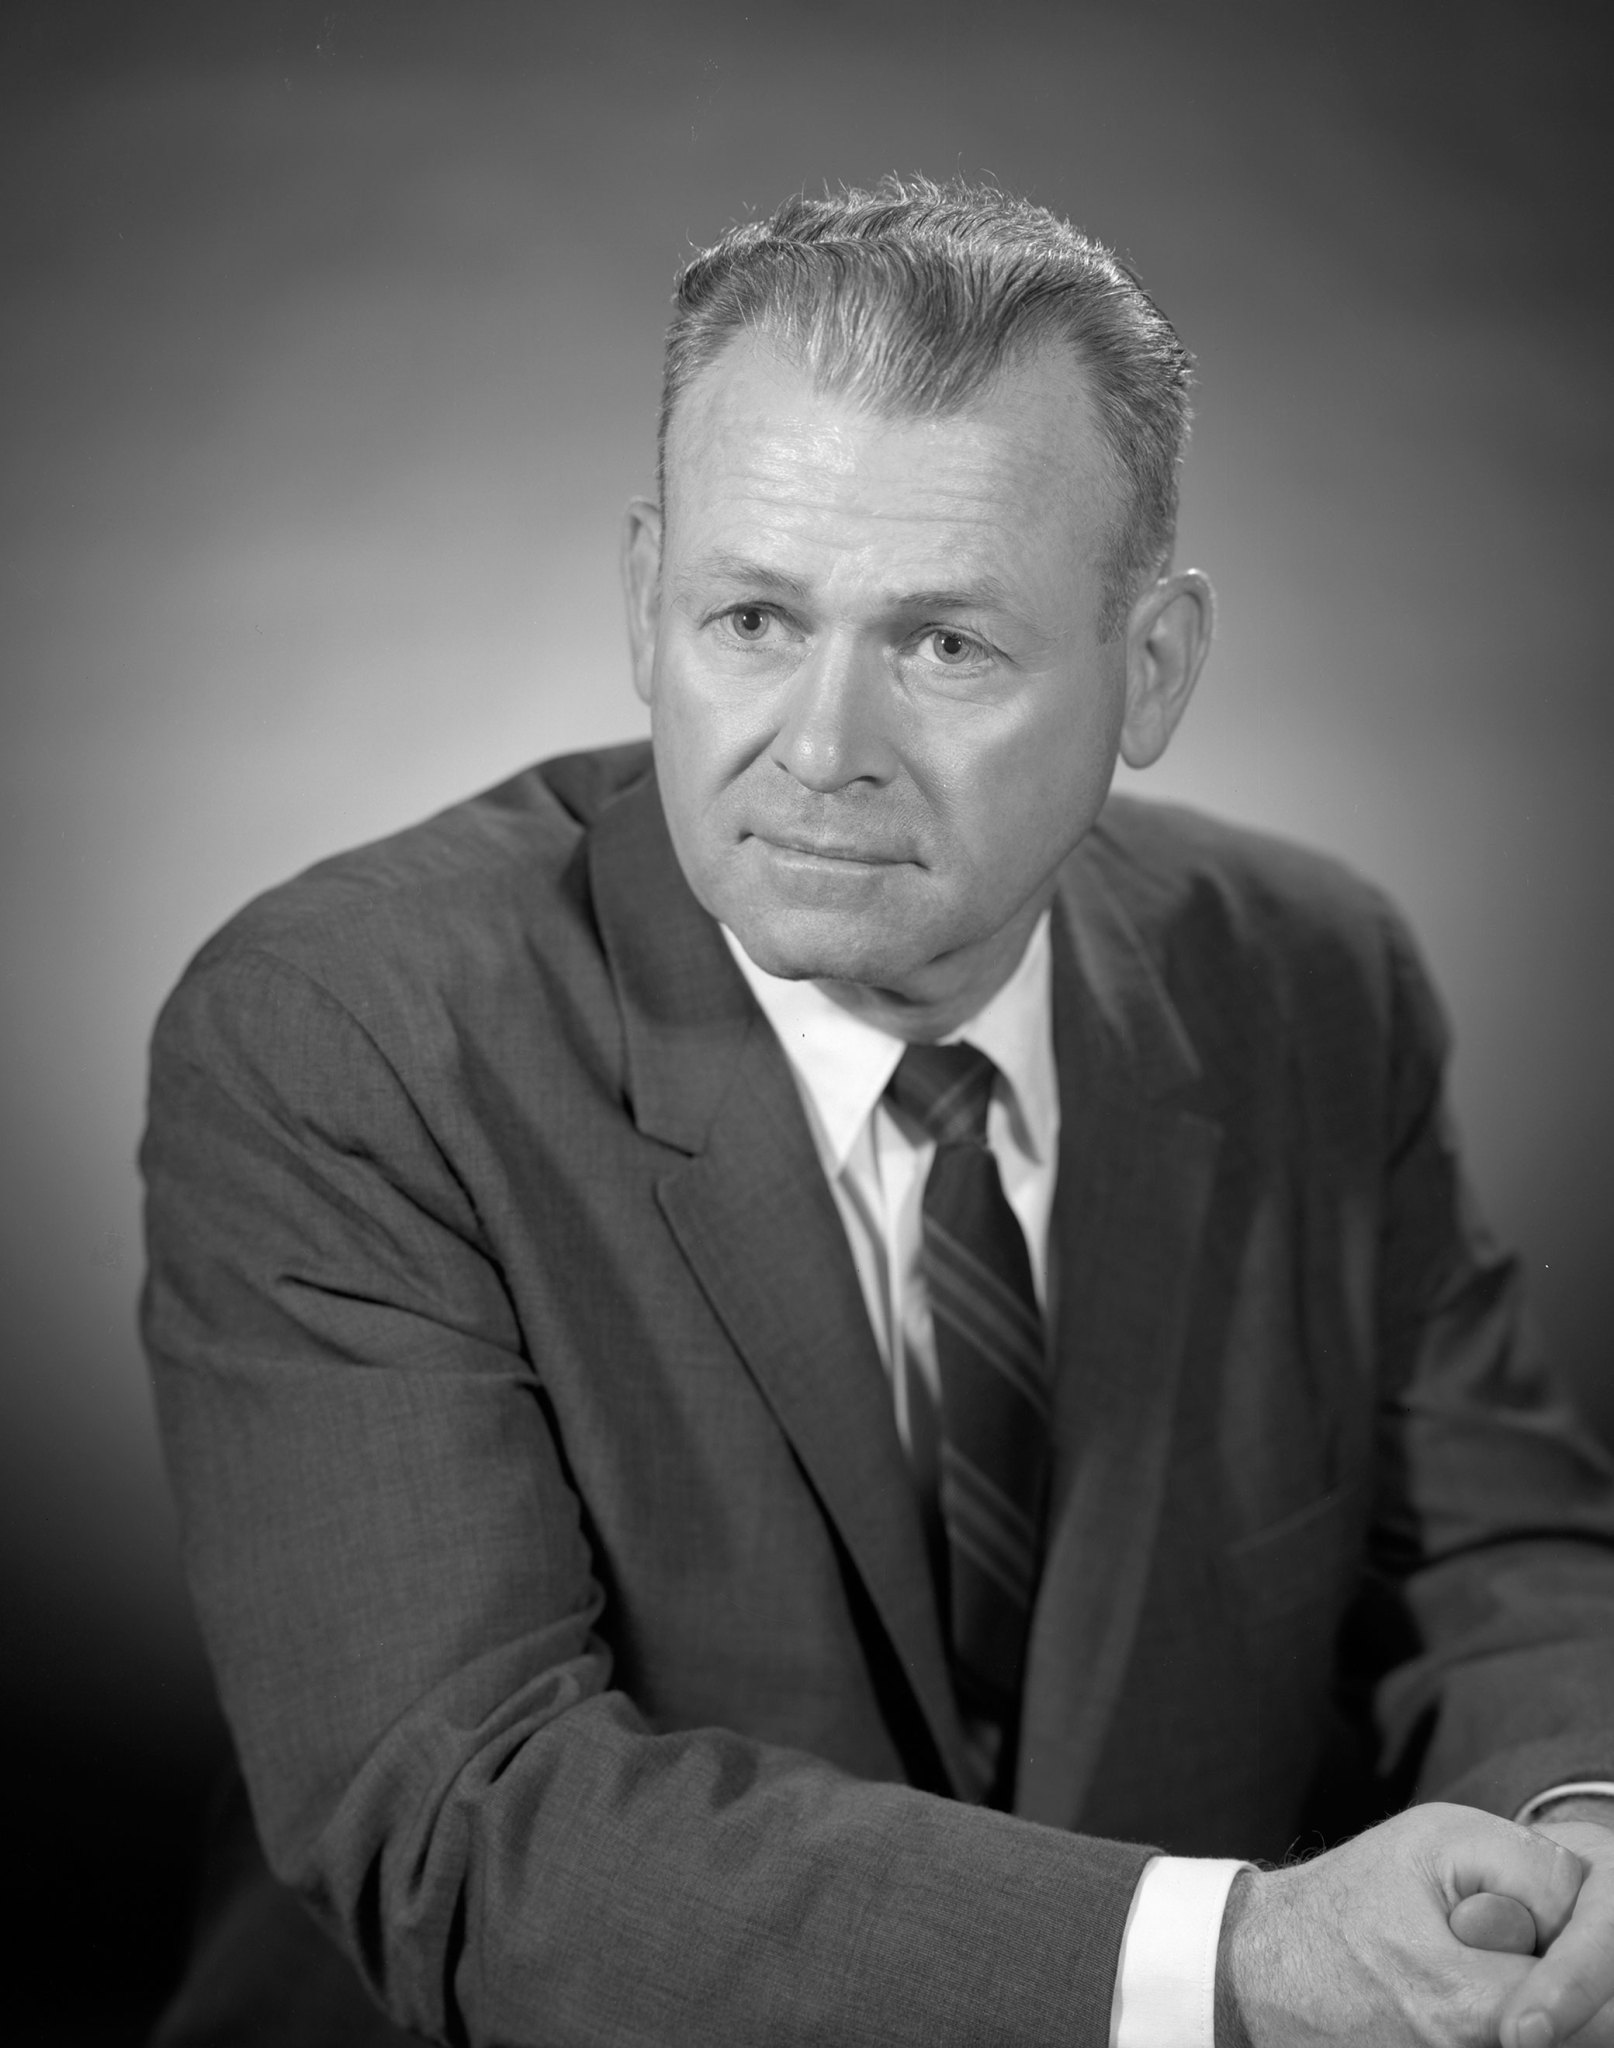 Charles J. Donlan